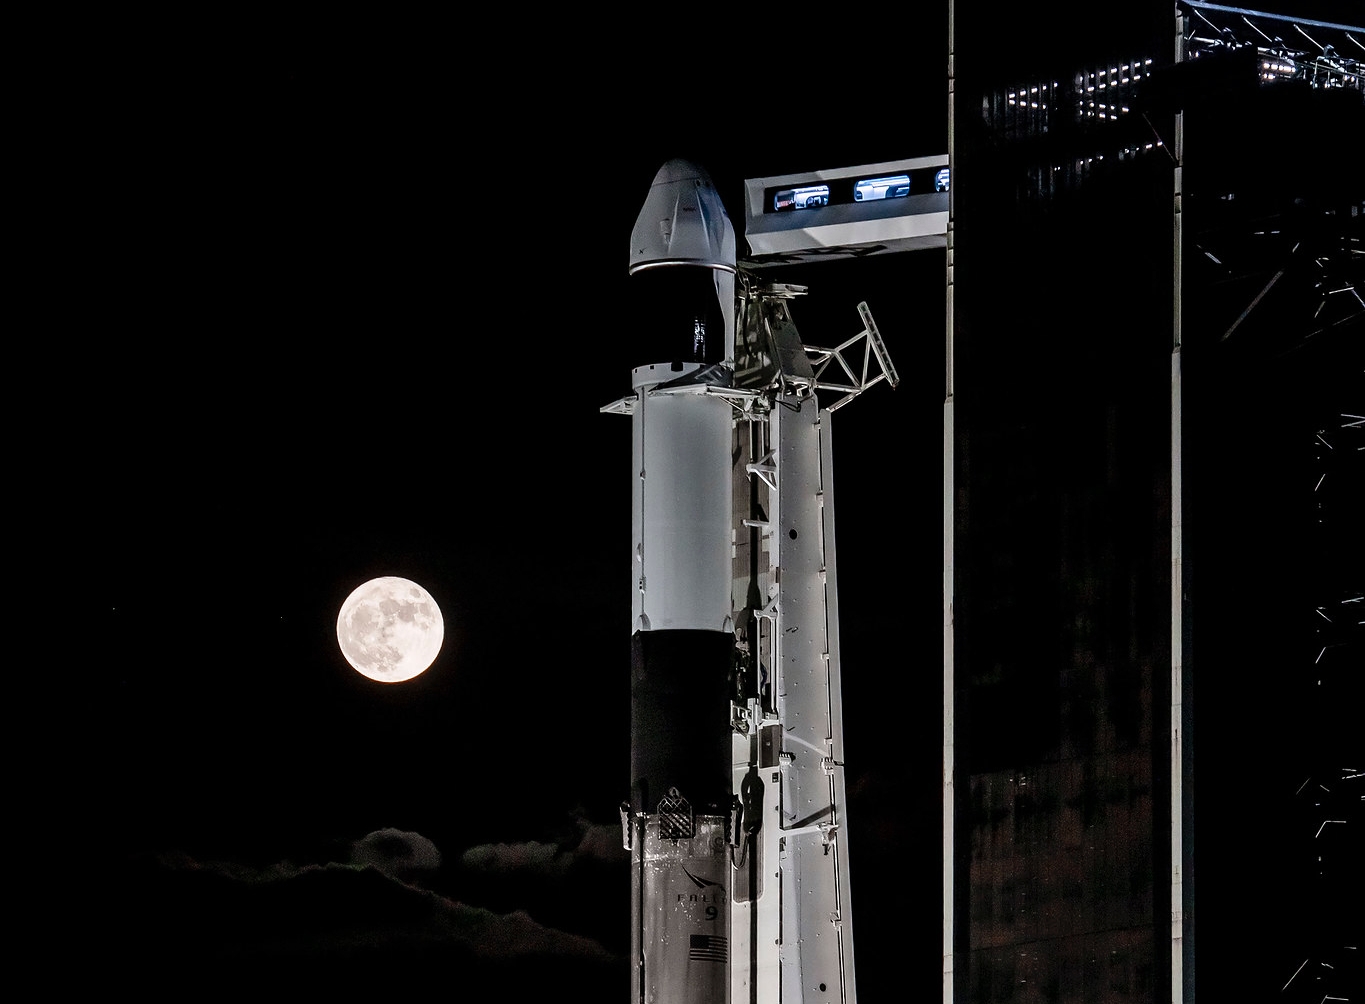 SpaceX показала фото запуска грузовой миссии корабля Dragon к МКС